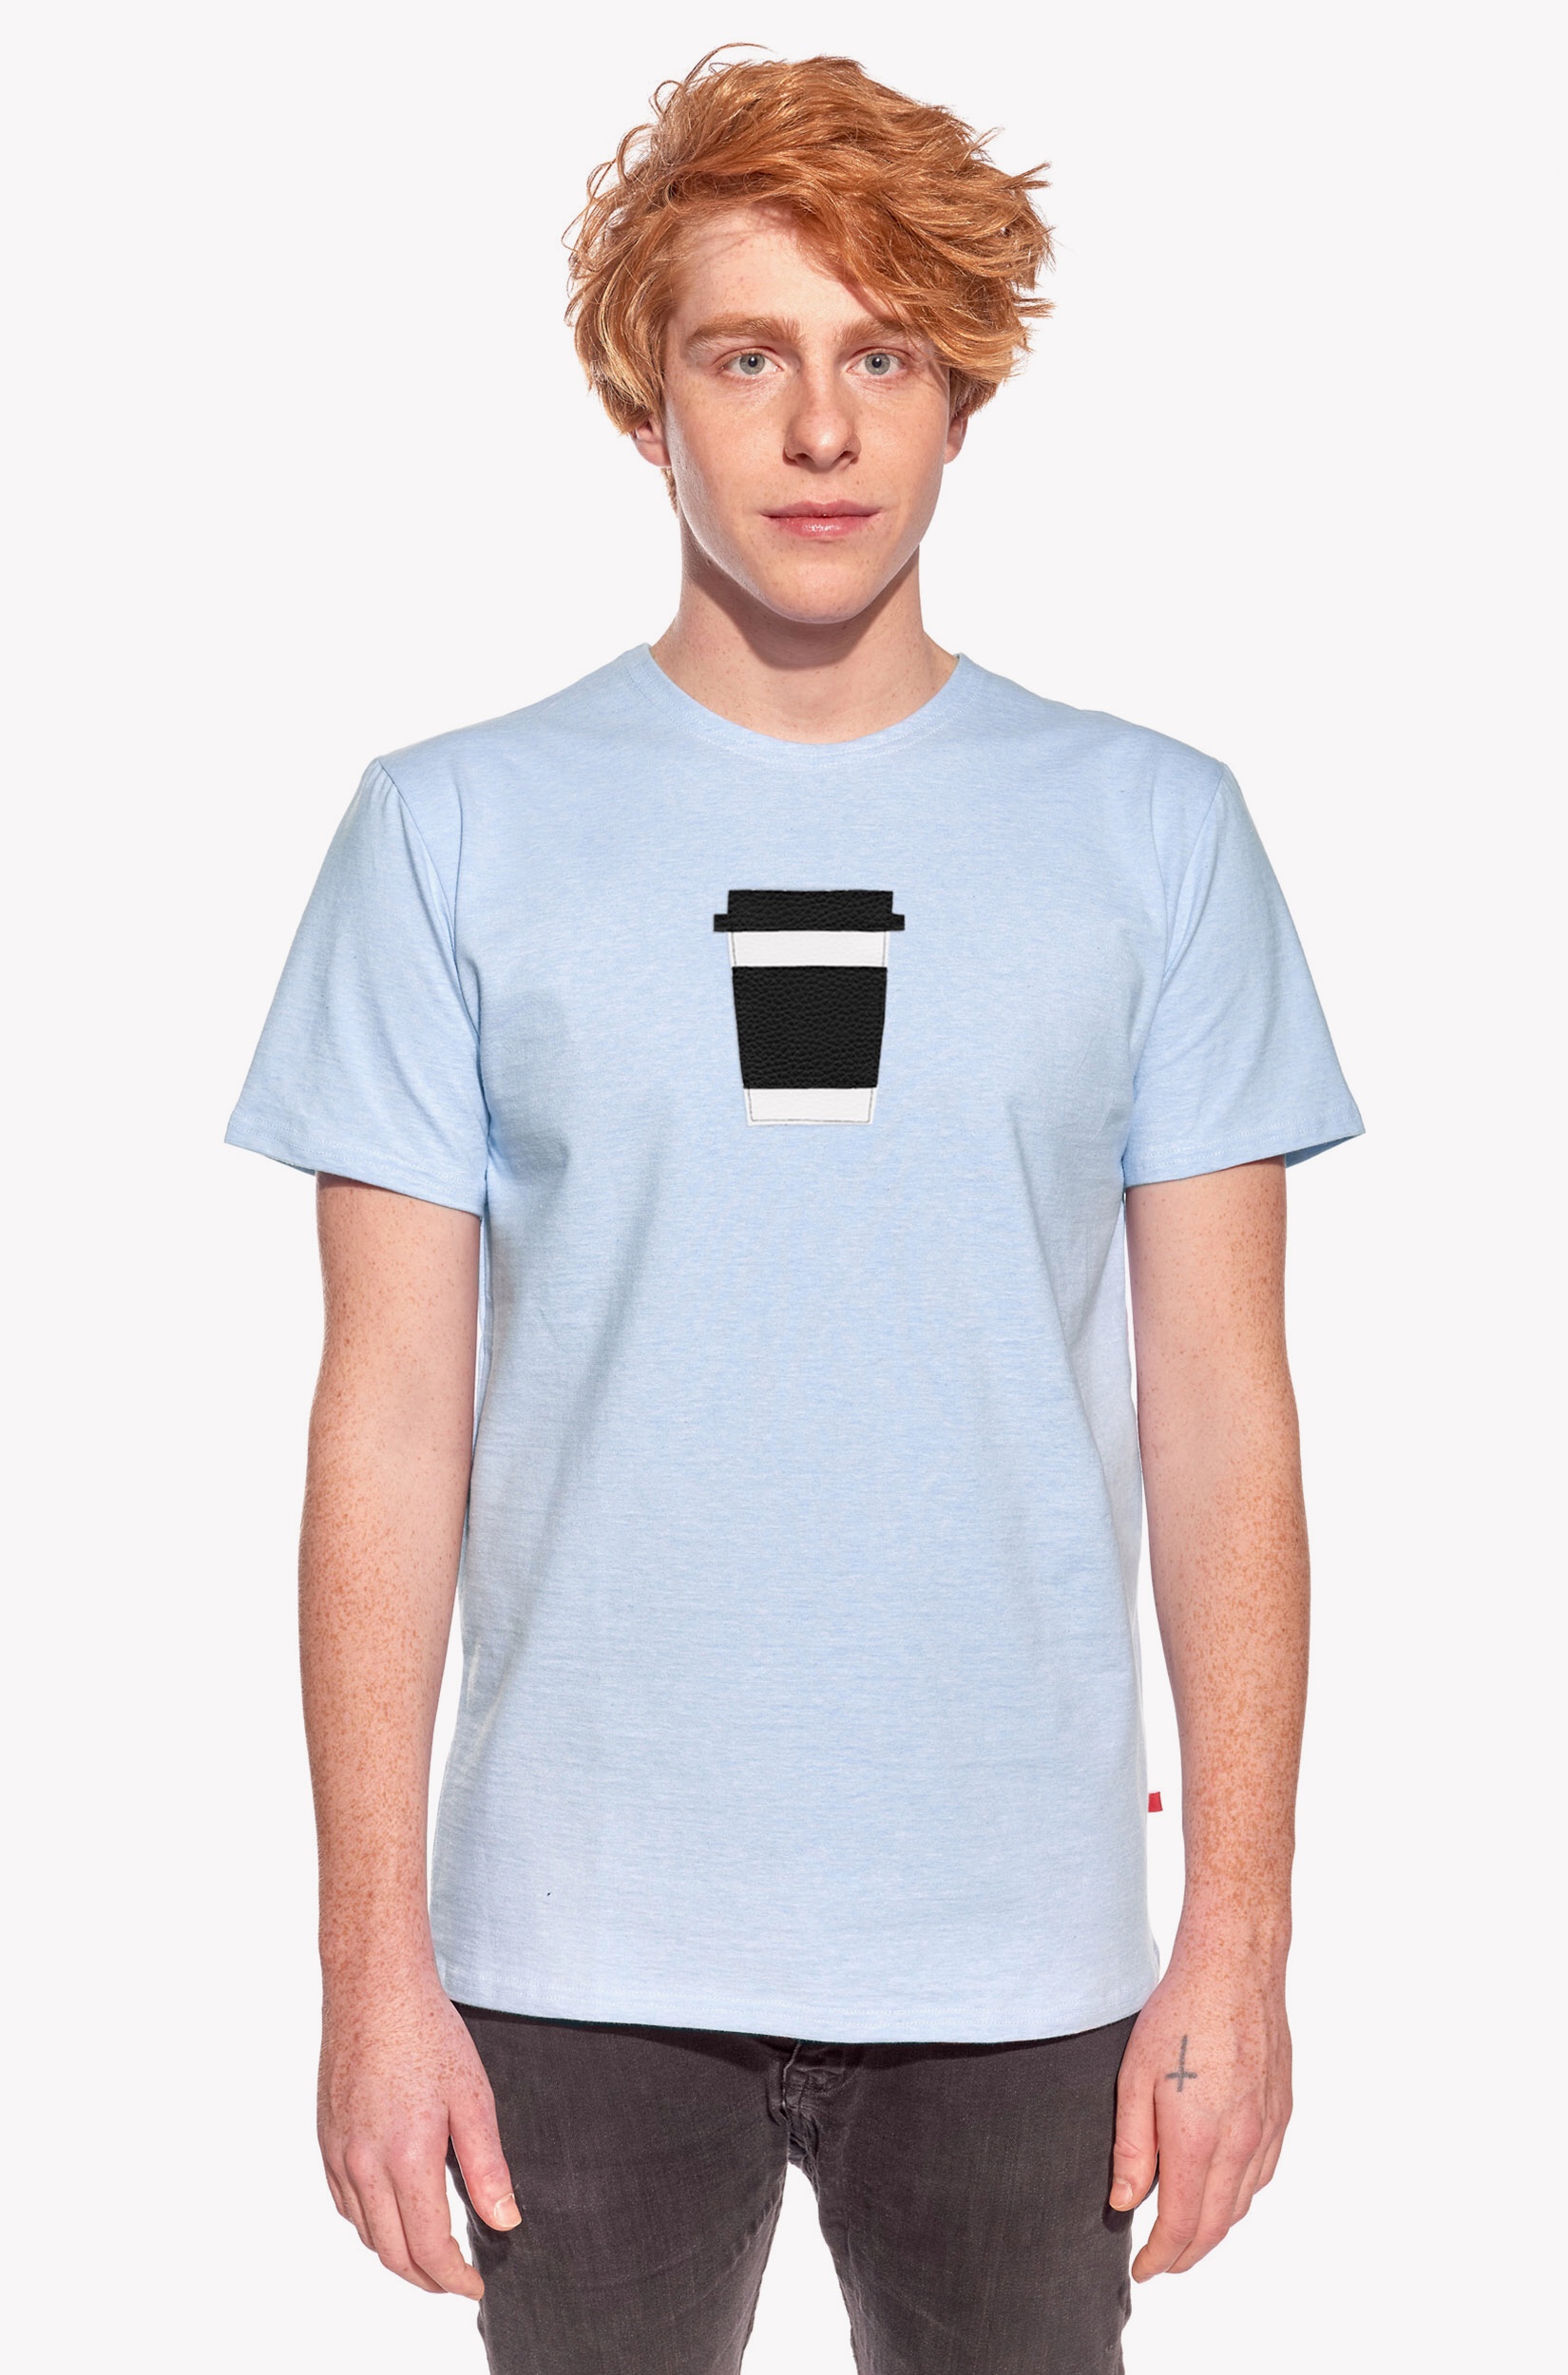 Shirt with coffee